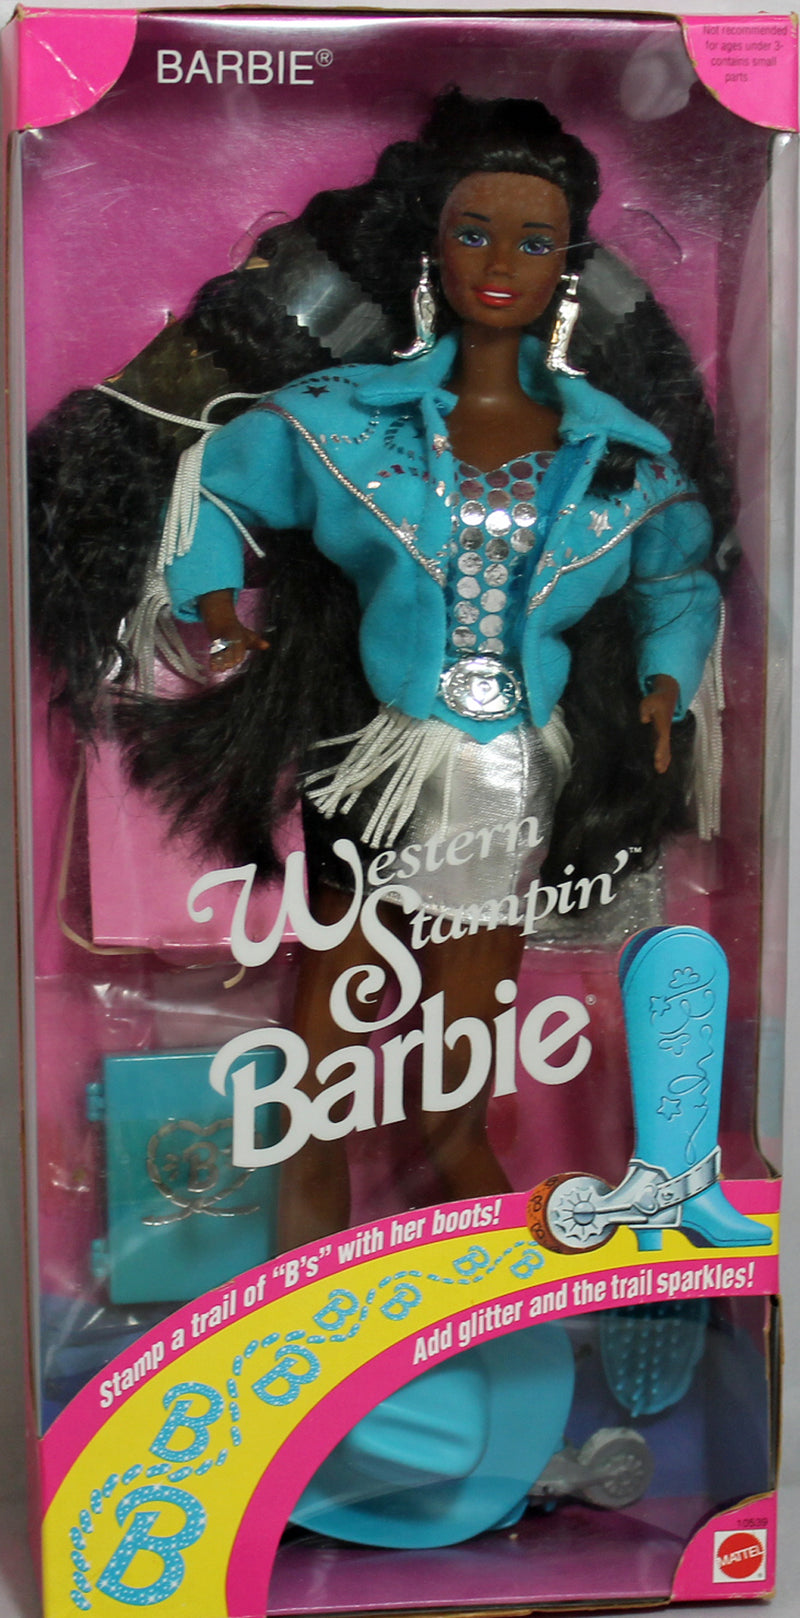 1993 Western Stampin' Barbie (10539) - African American